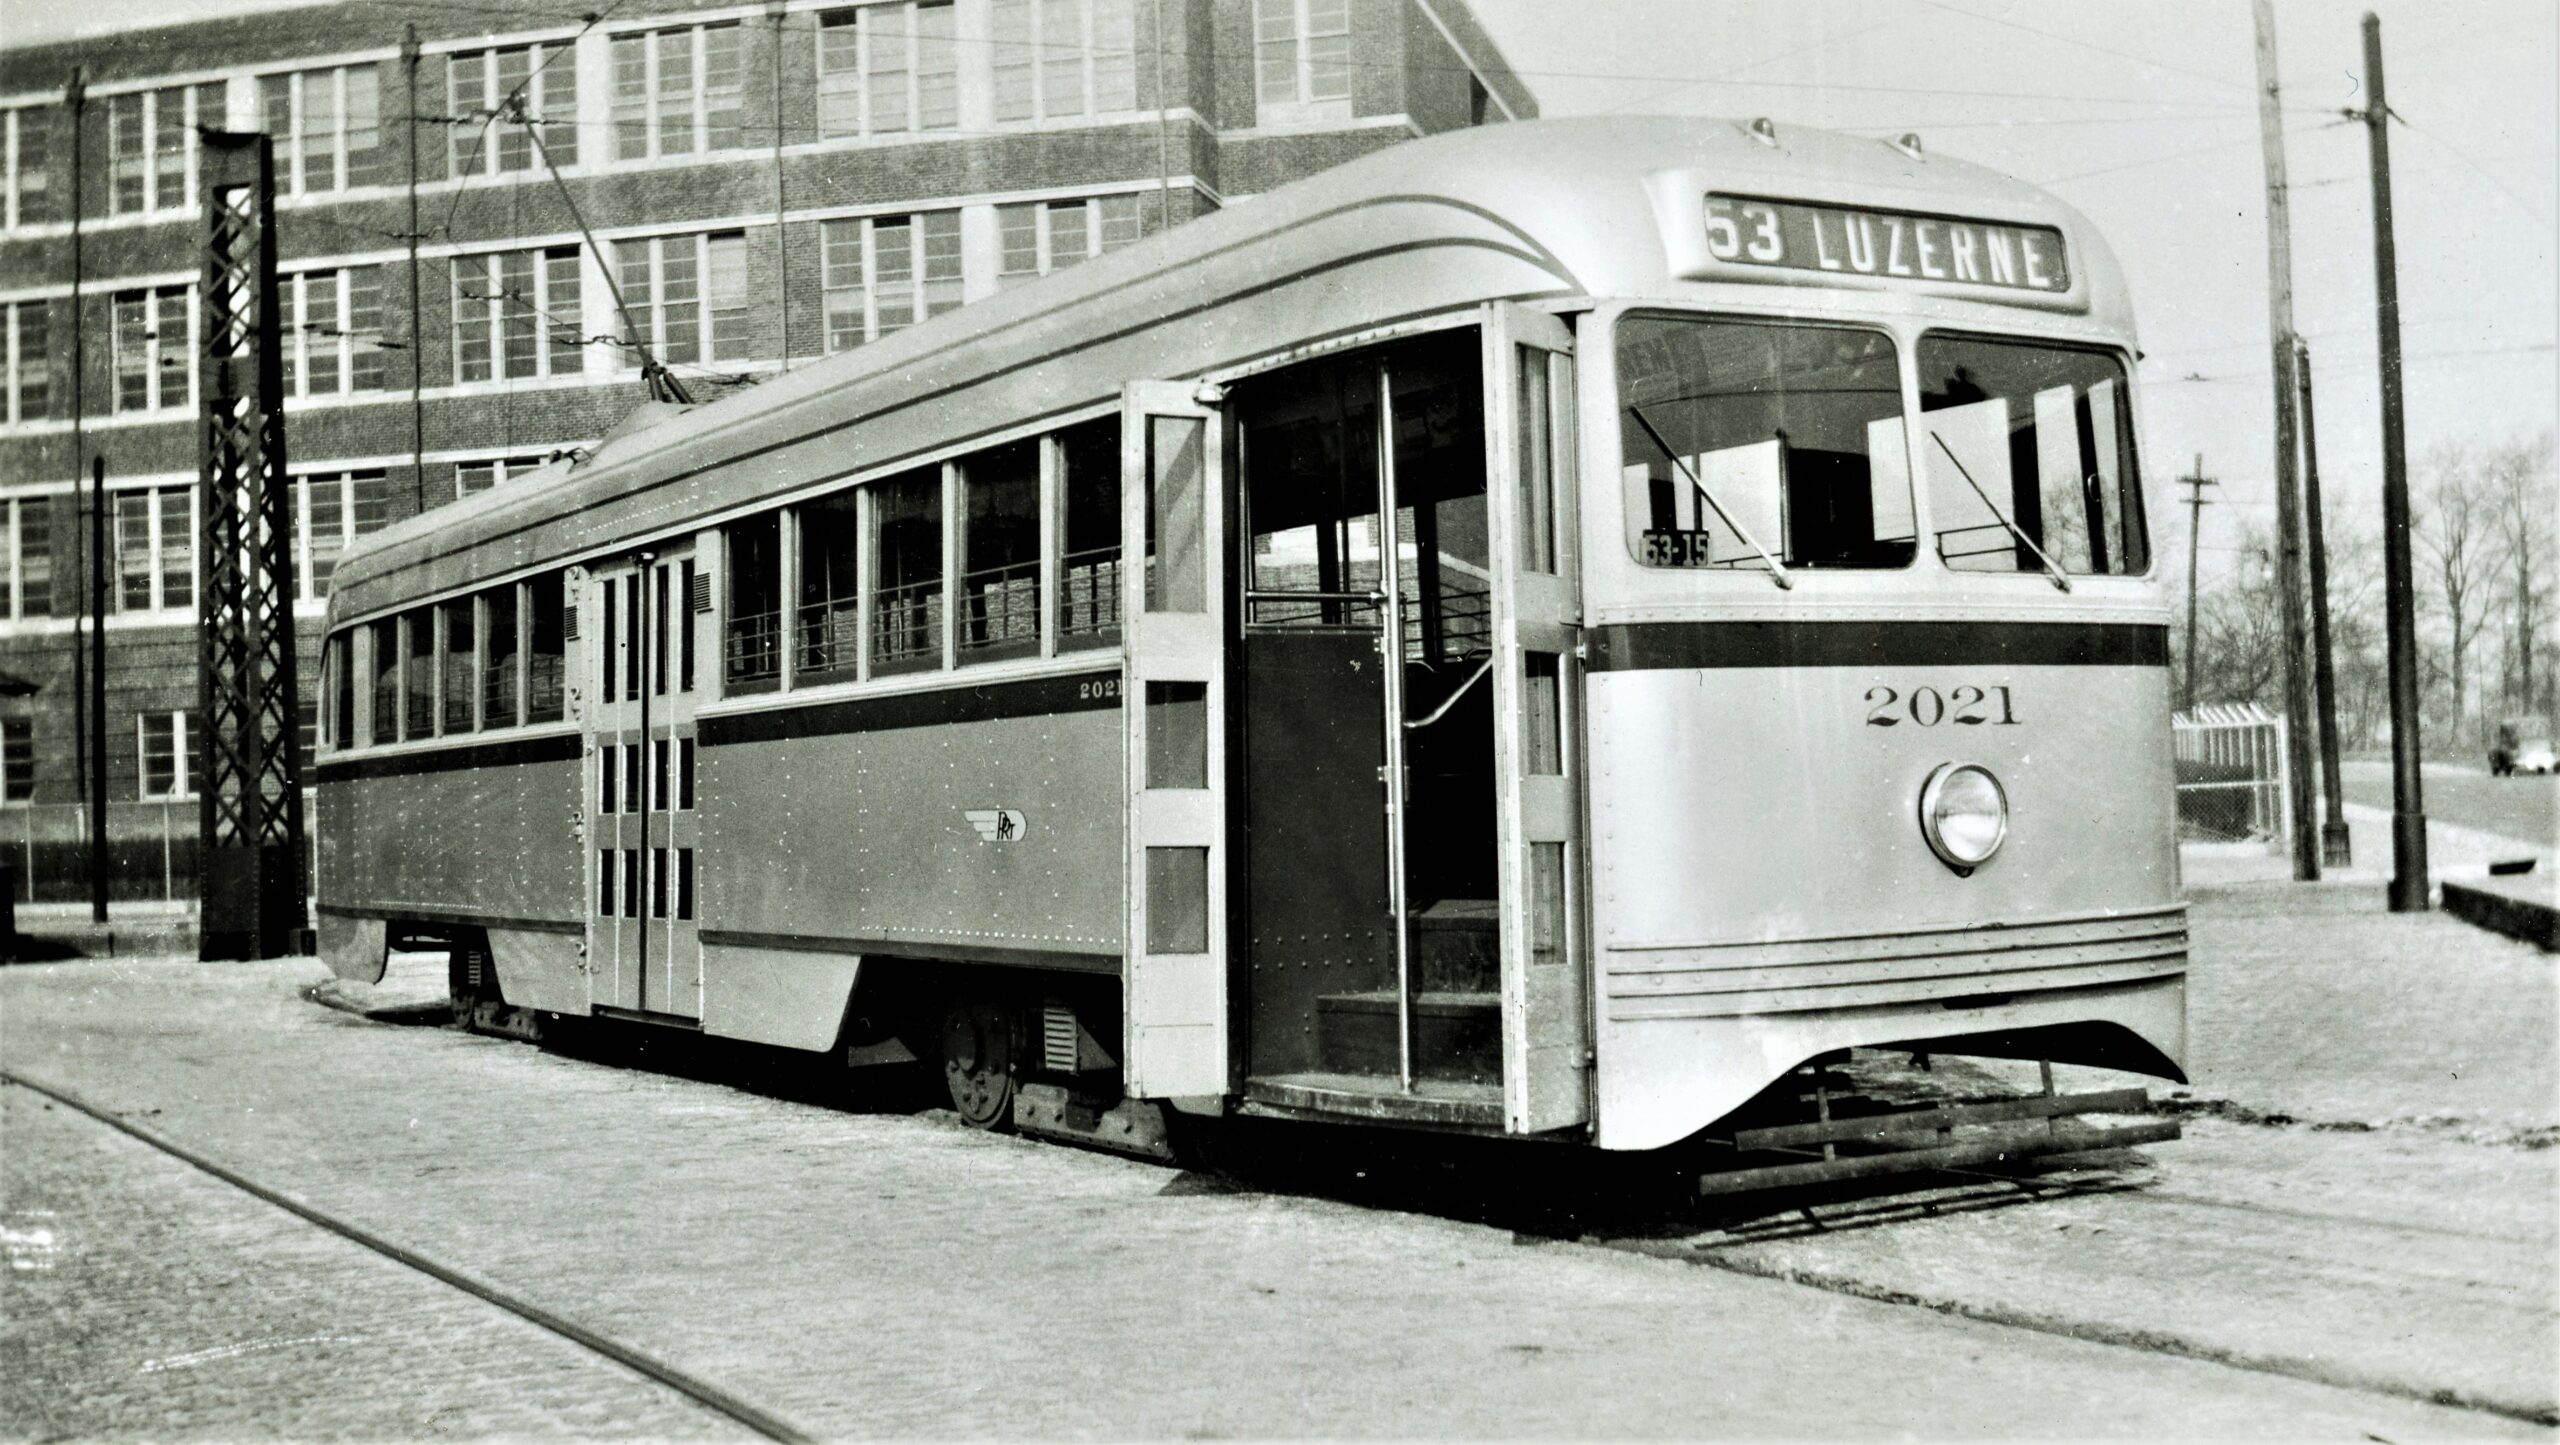 Philadelphia Transportation Company | PTC | Philadelphia, Pennsylvania | Brill Liner trolley car #2021 | Route 53 Luzerne | June 2, 1947 | J.A. Rehor photograph